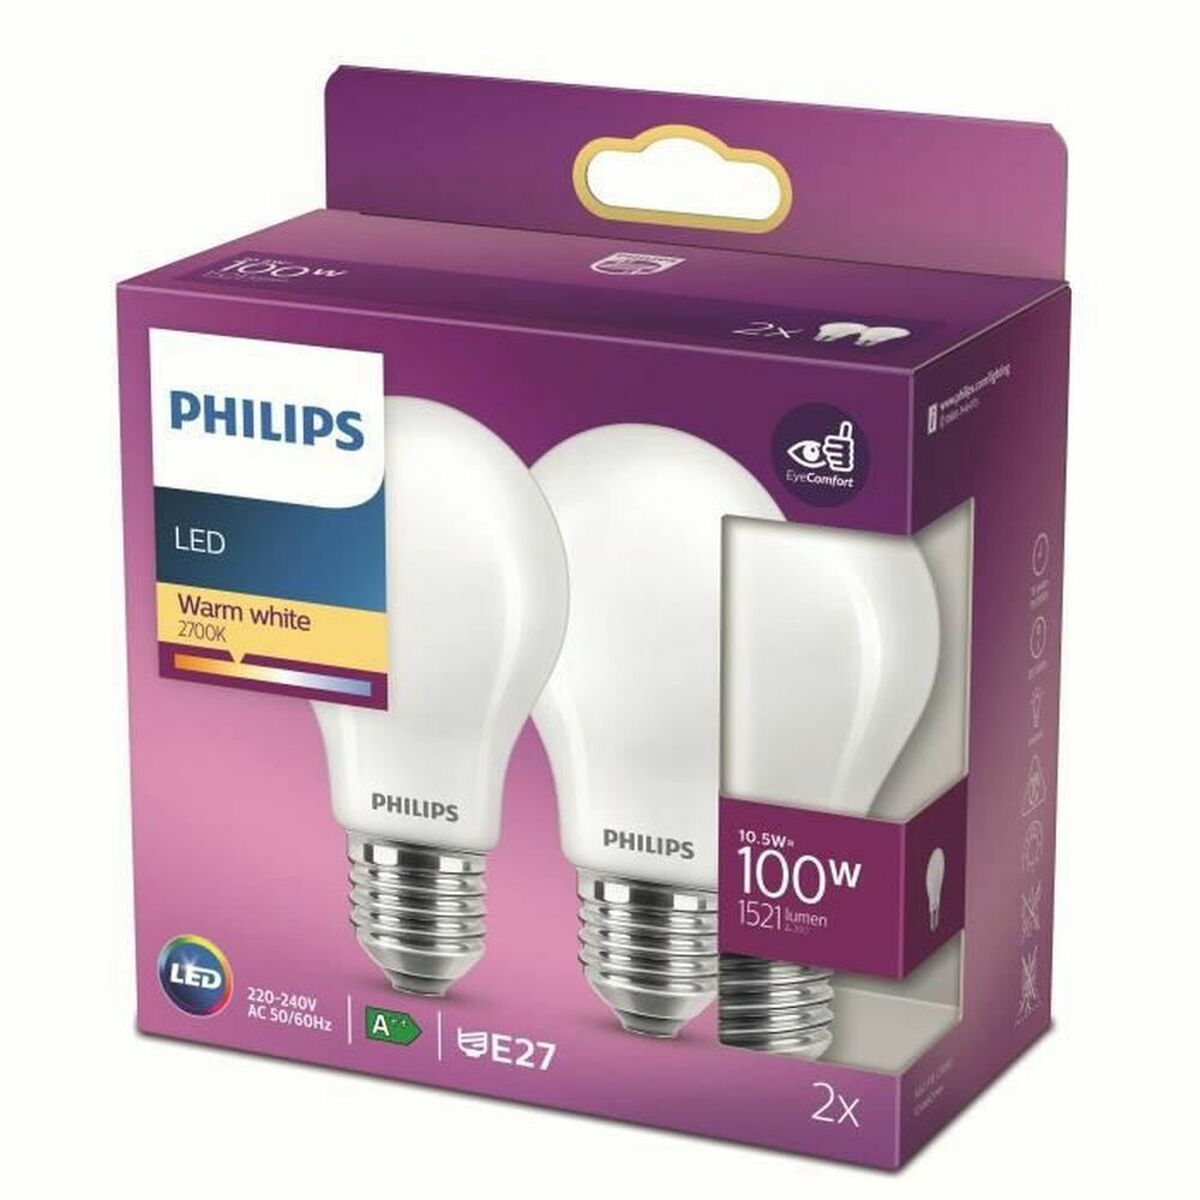 LED lamp Philips White D A+ (2700k) (2 Units) (Refurbished A+)